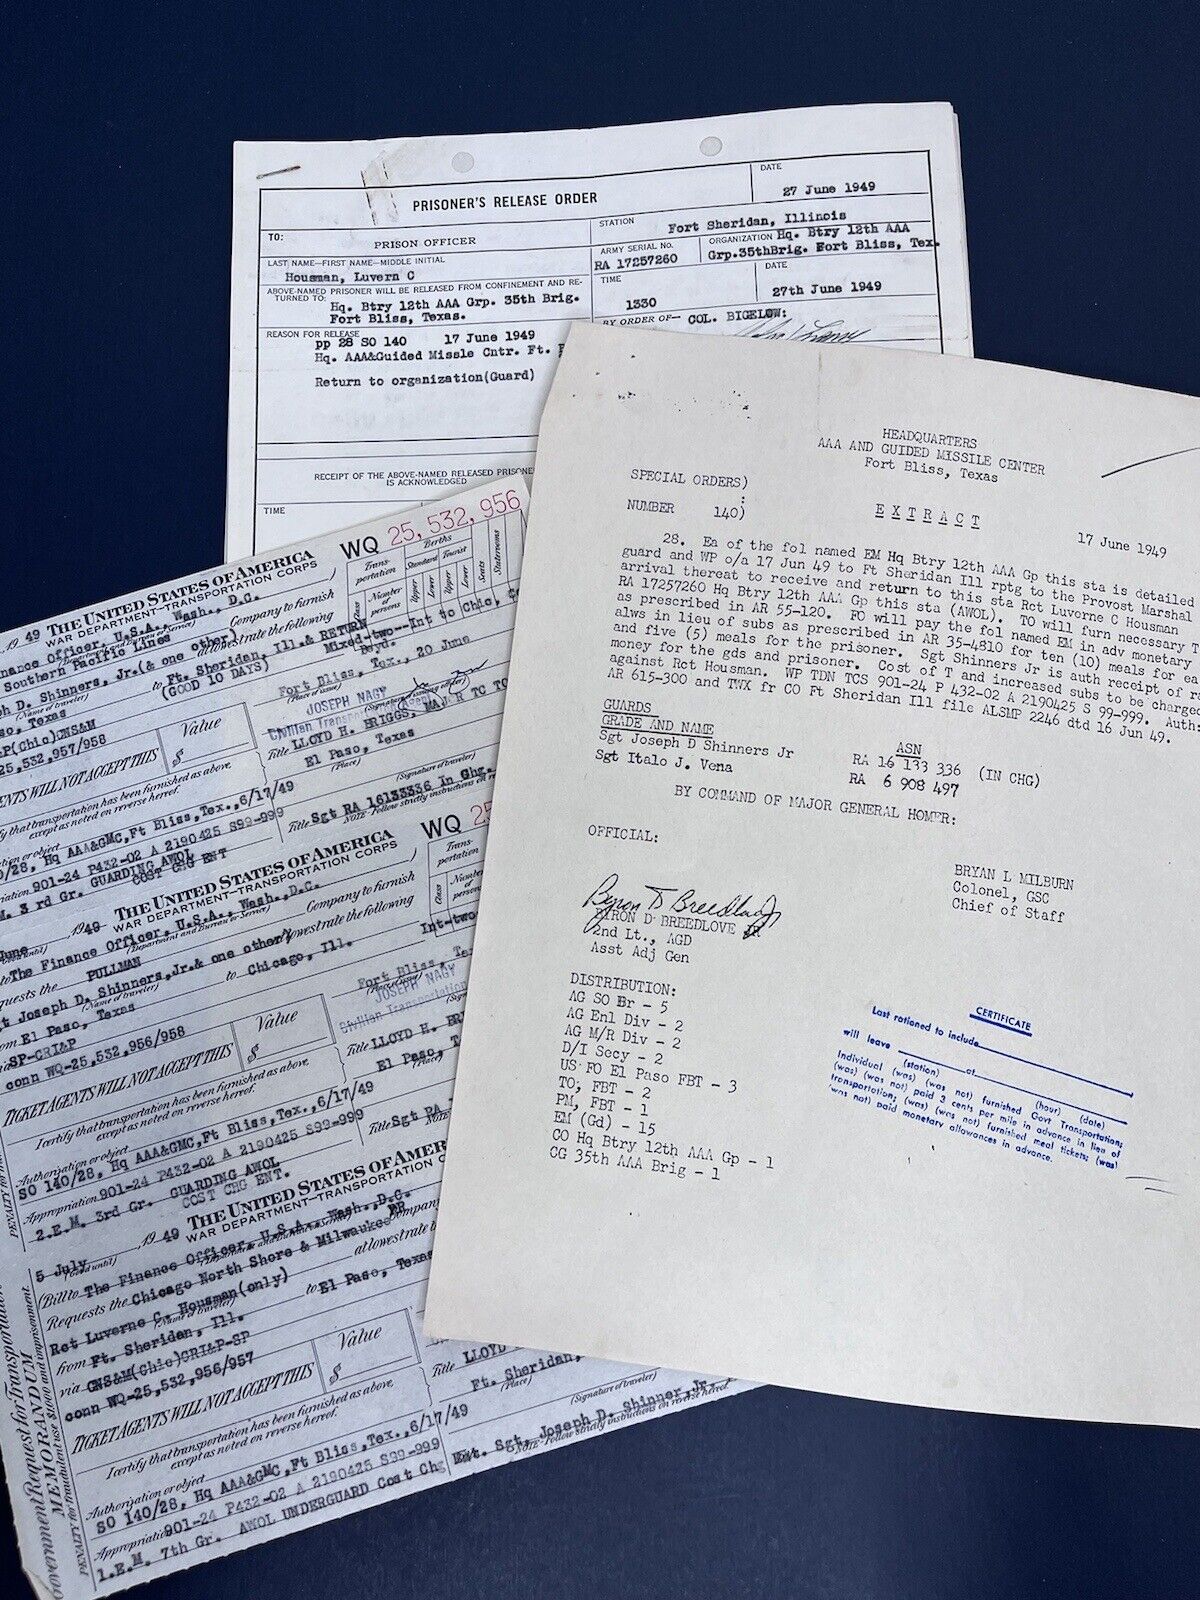 Fort bliss Texas Prisoner Release Order Of Release Military Forms June 17 1949